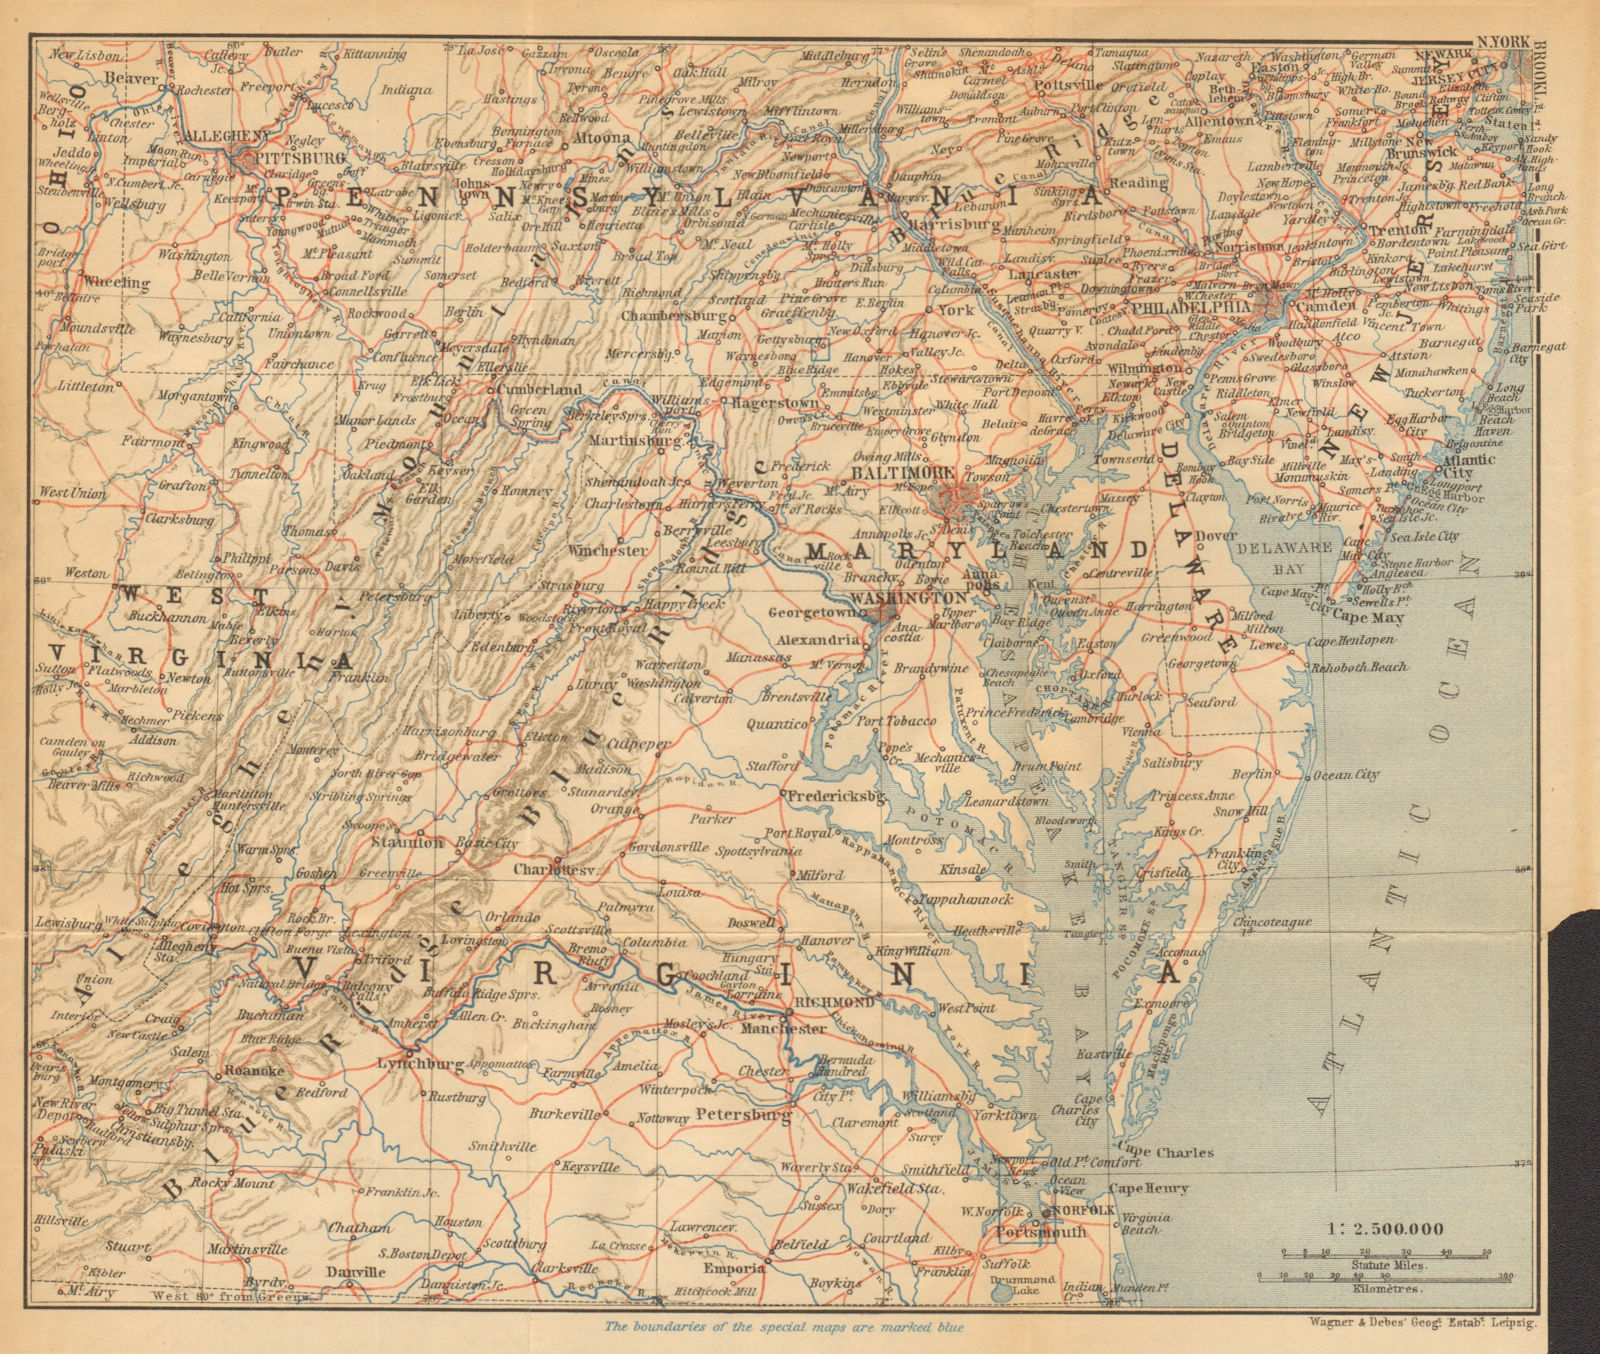 Associate Product USA ATLANTIC STATES RAILWAY MAP. Appalachia. Baltimore Philadelphia 1904